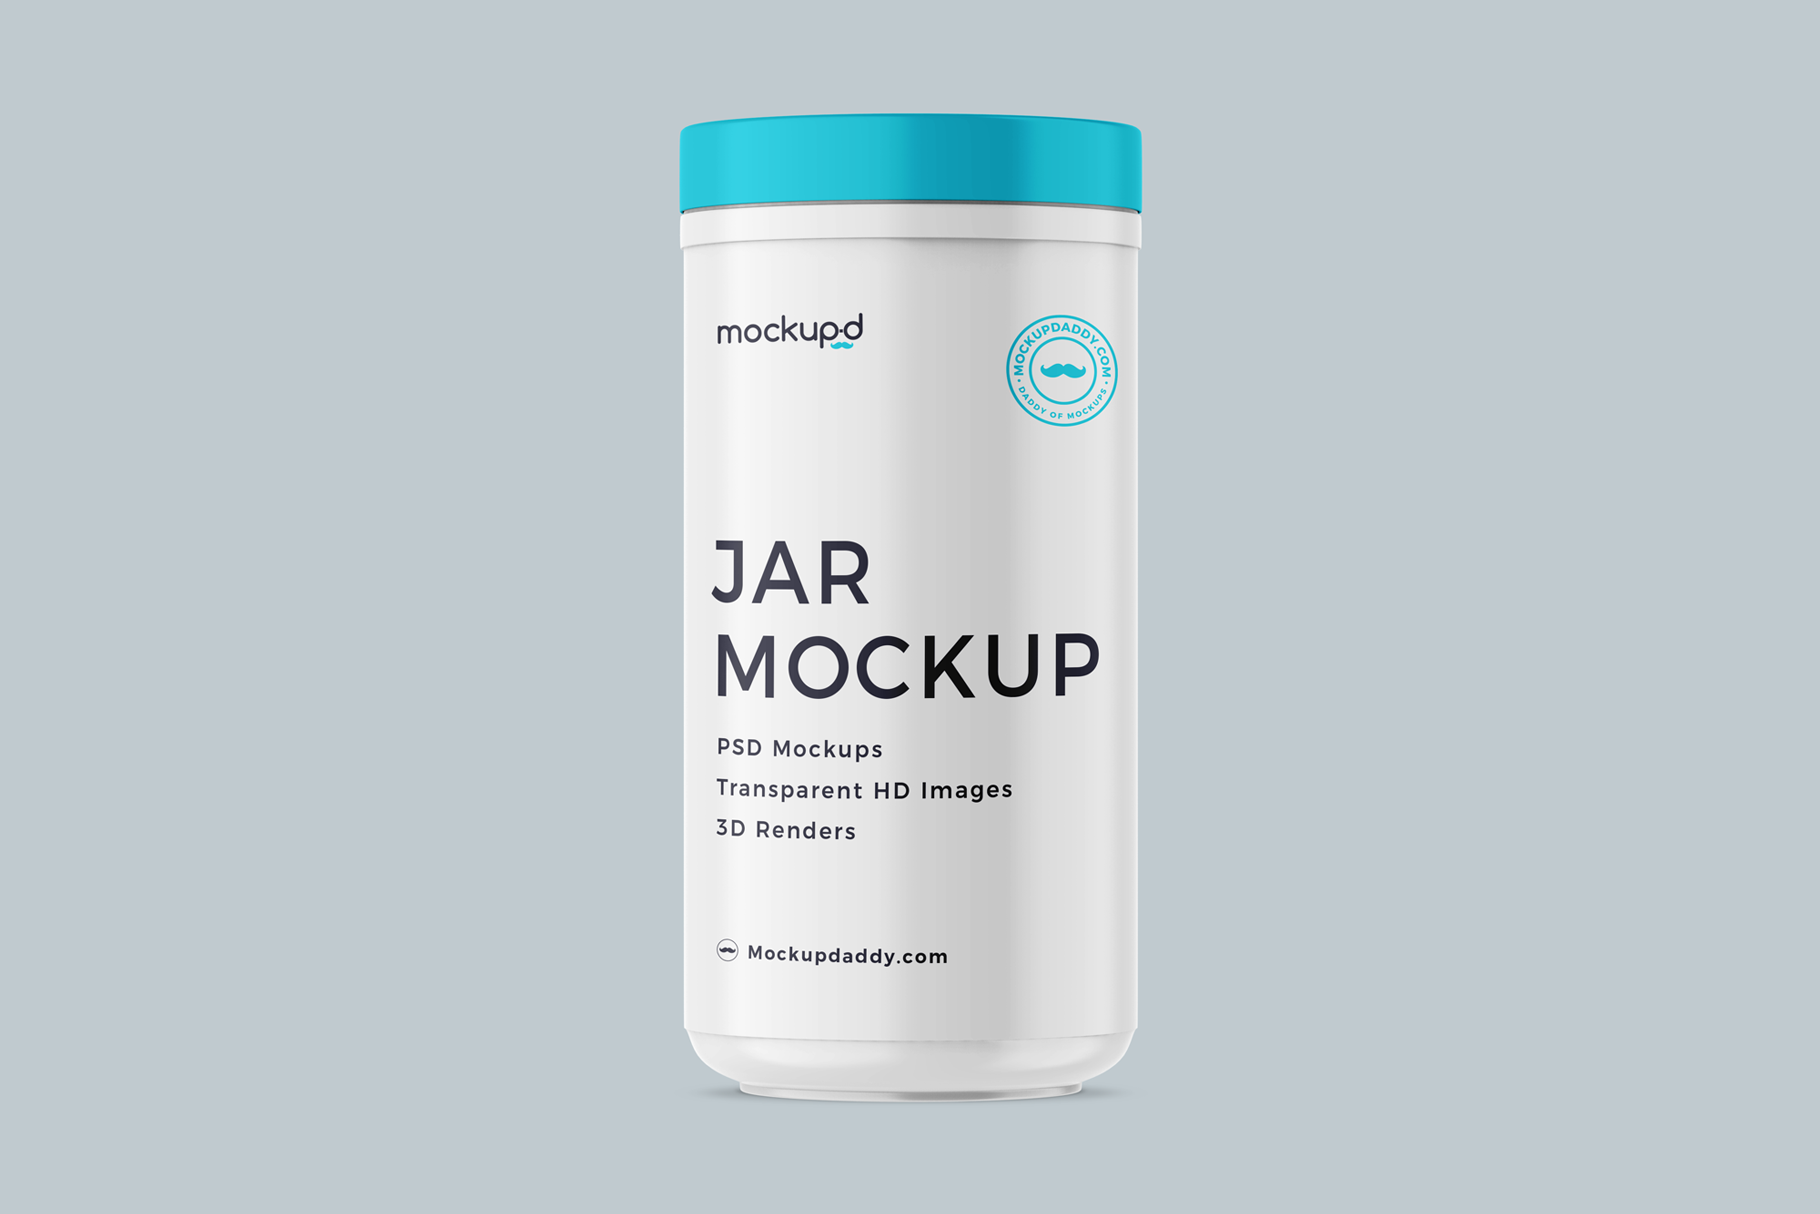 White 3D Supplement Jar Mockup with blue lid.